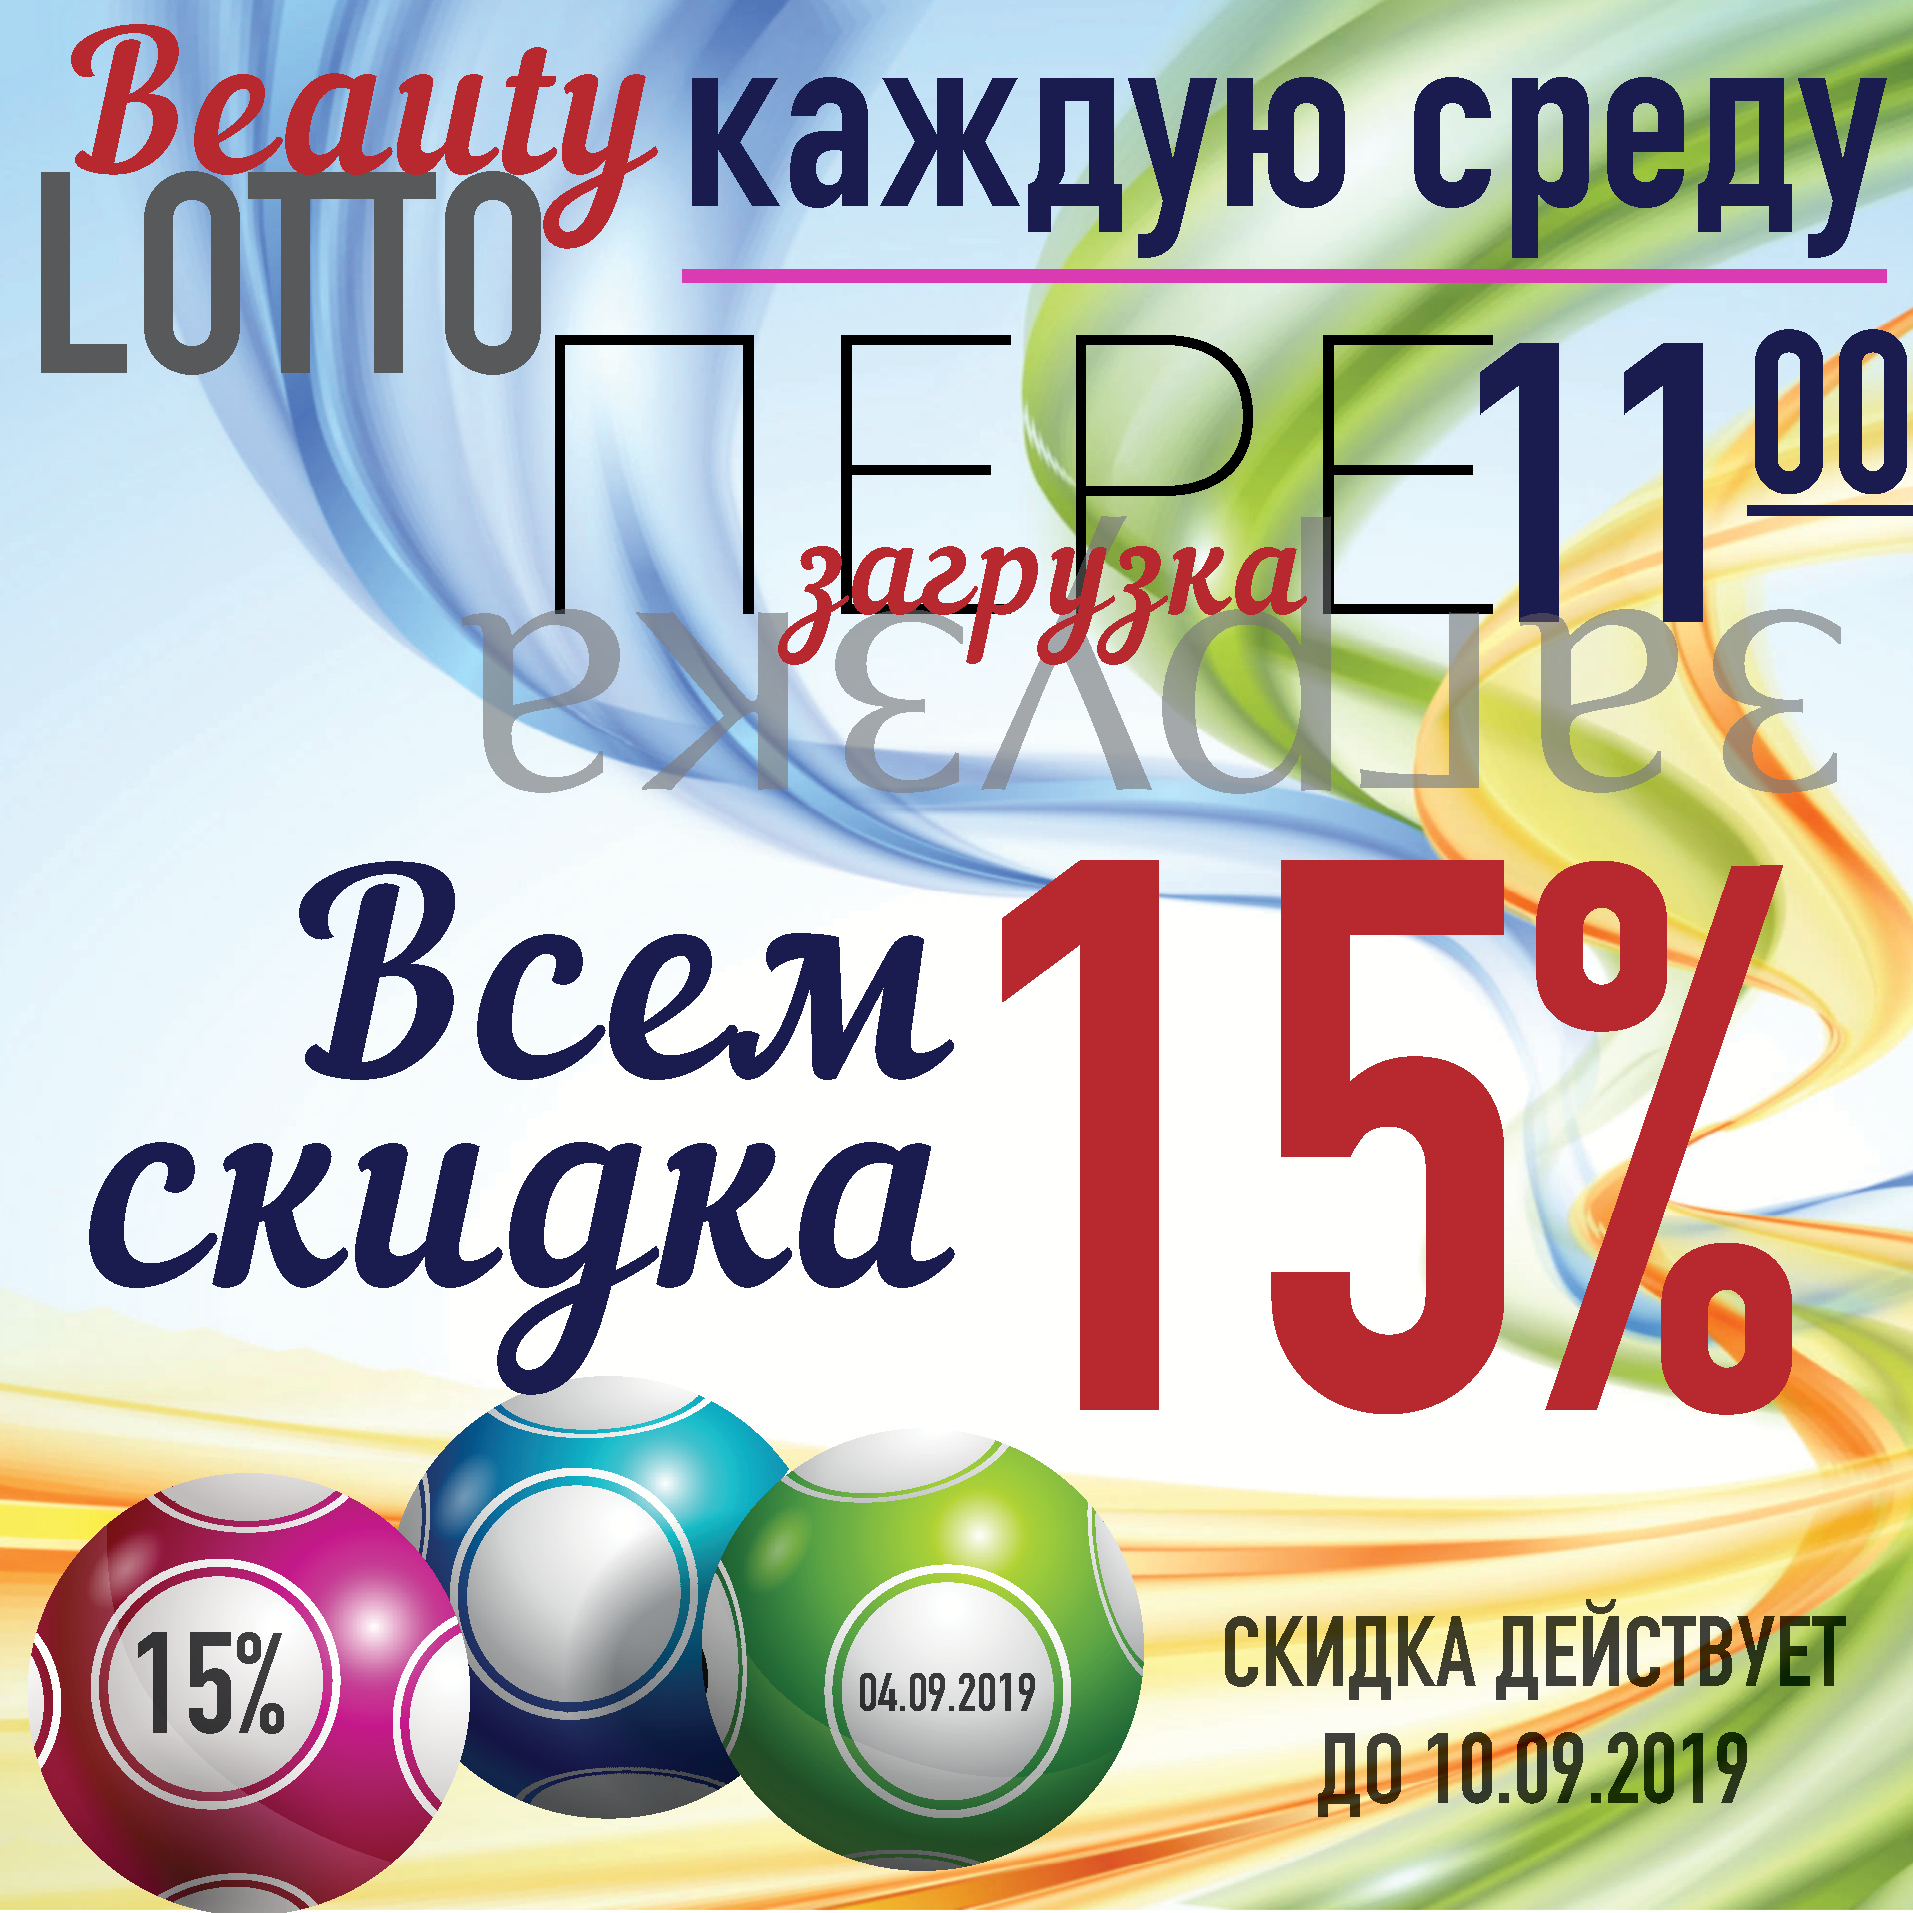 Beauty Lotto